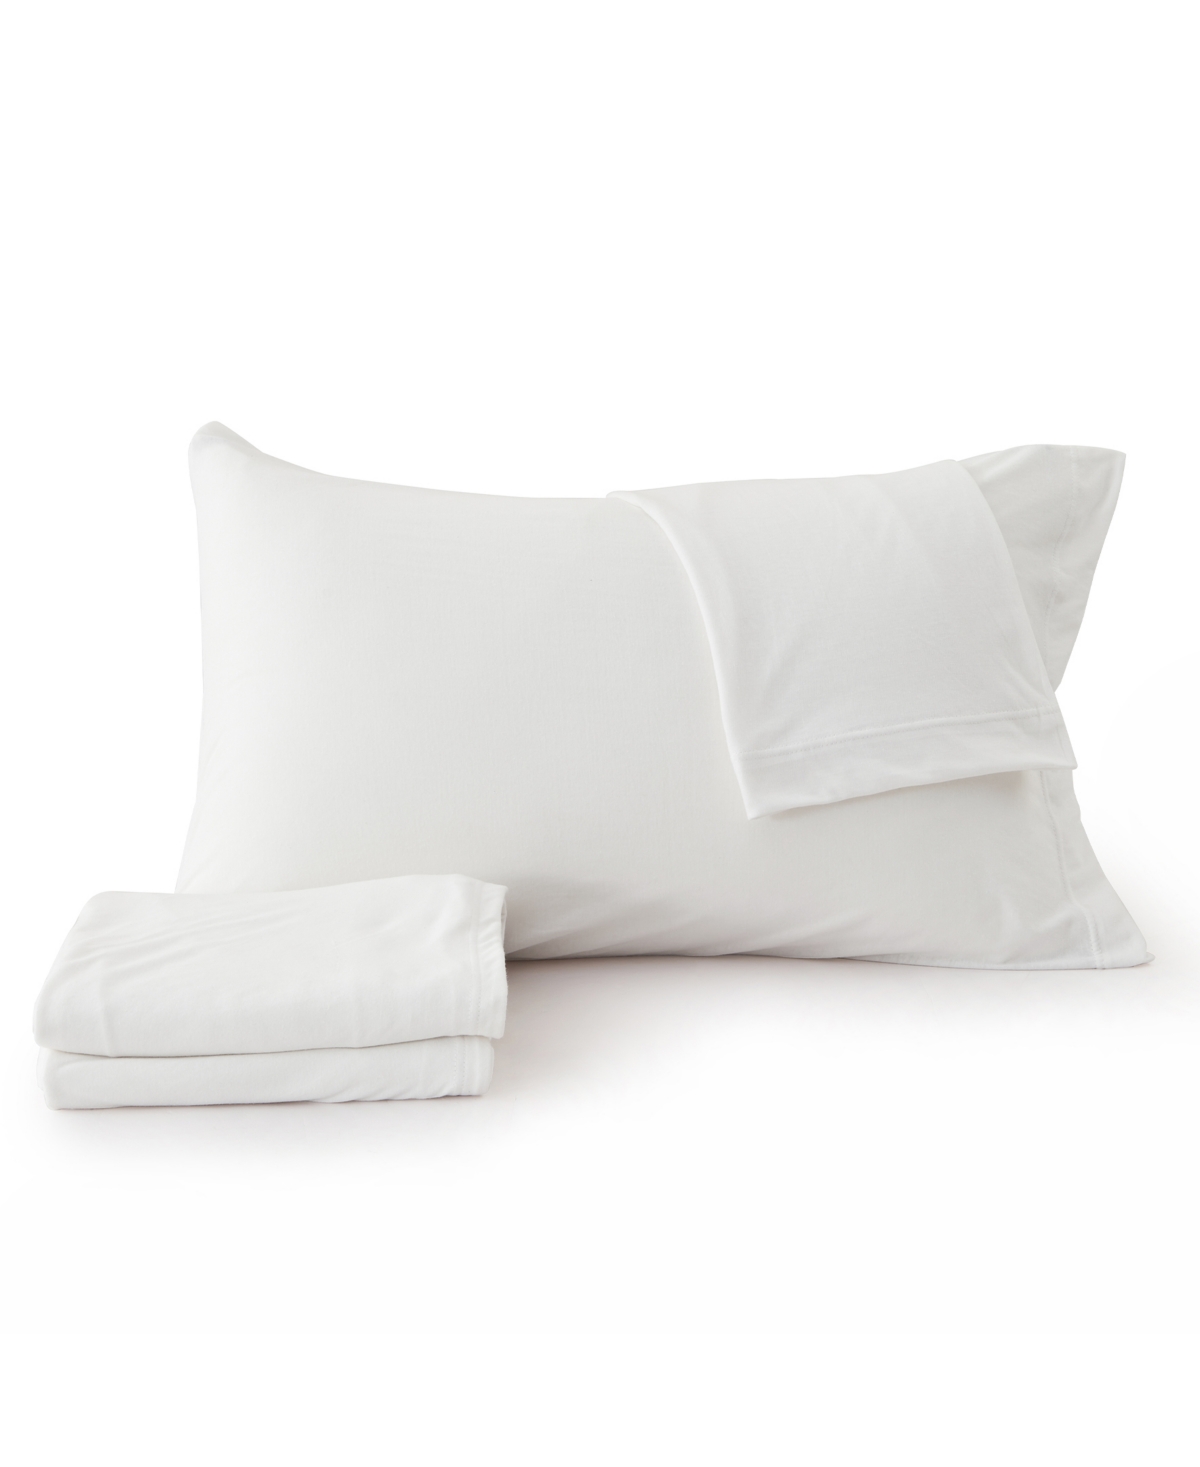 Premium Comforts Heathered Melange T-shirt Jersey Knit Cotton Blend 3 Piece Sheet Set, Twin In Winter White